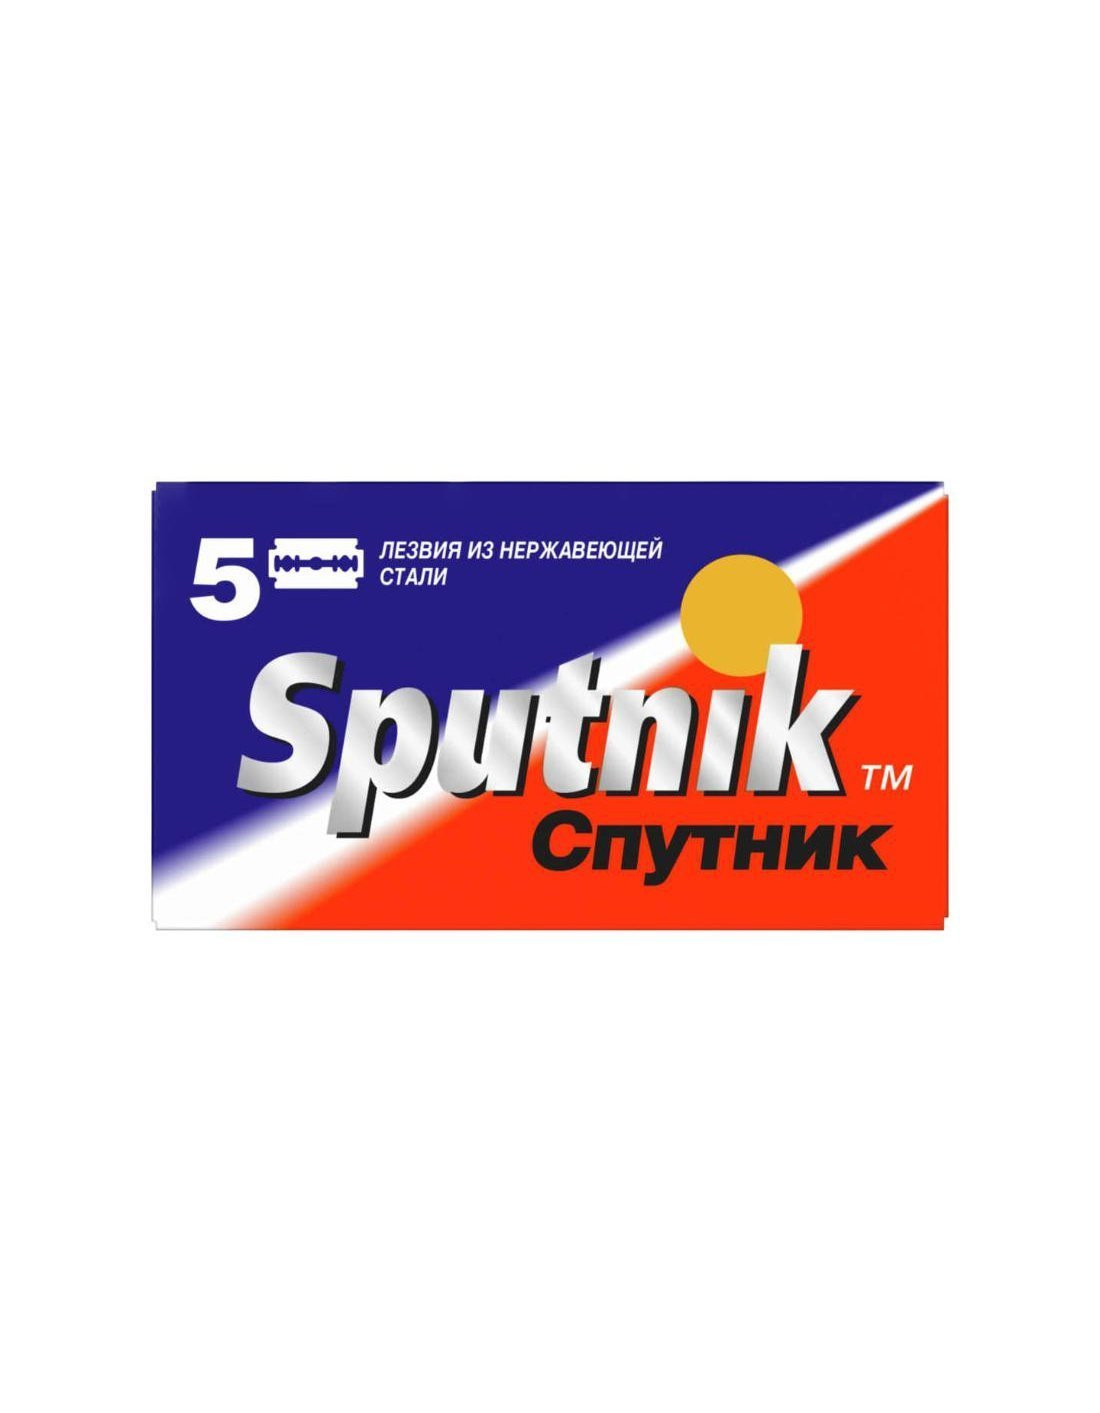 Product image 2 for Sputnik Cnythnk  Double Edge Razor Blades